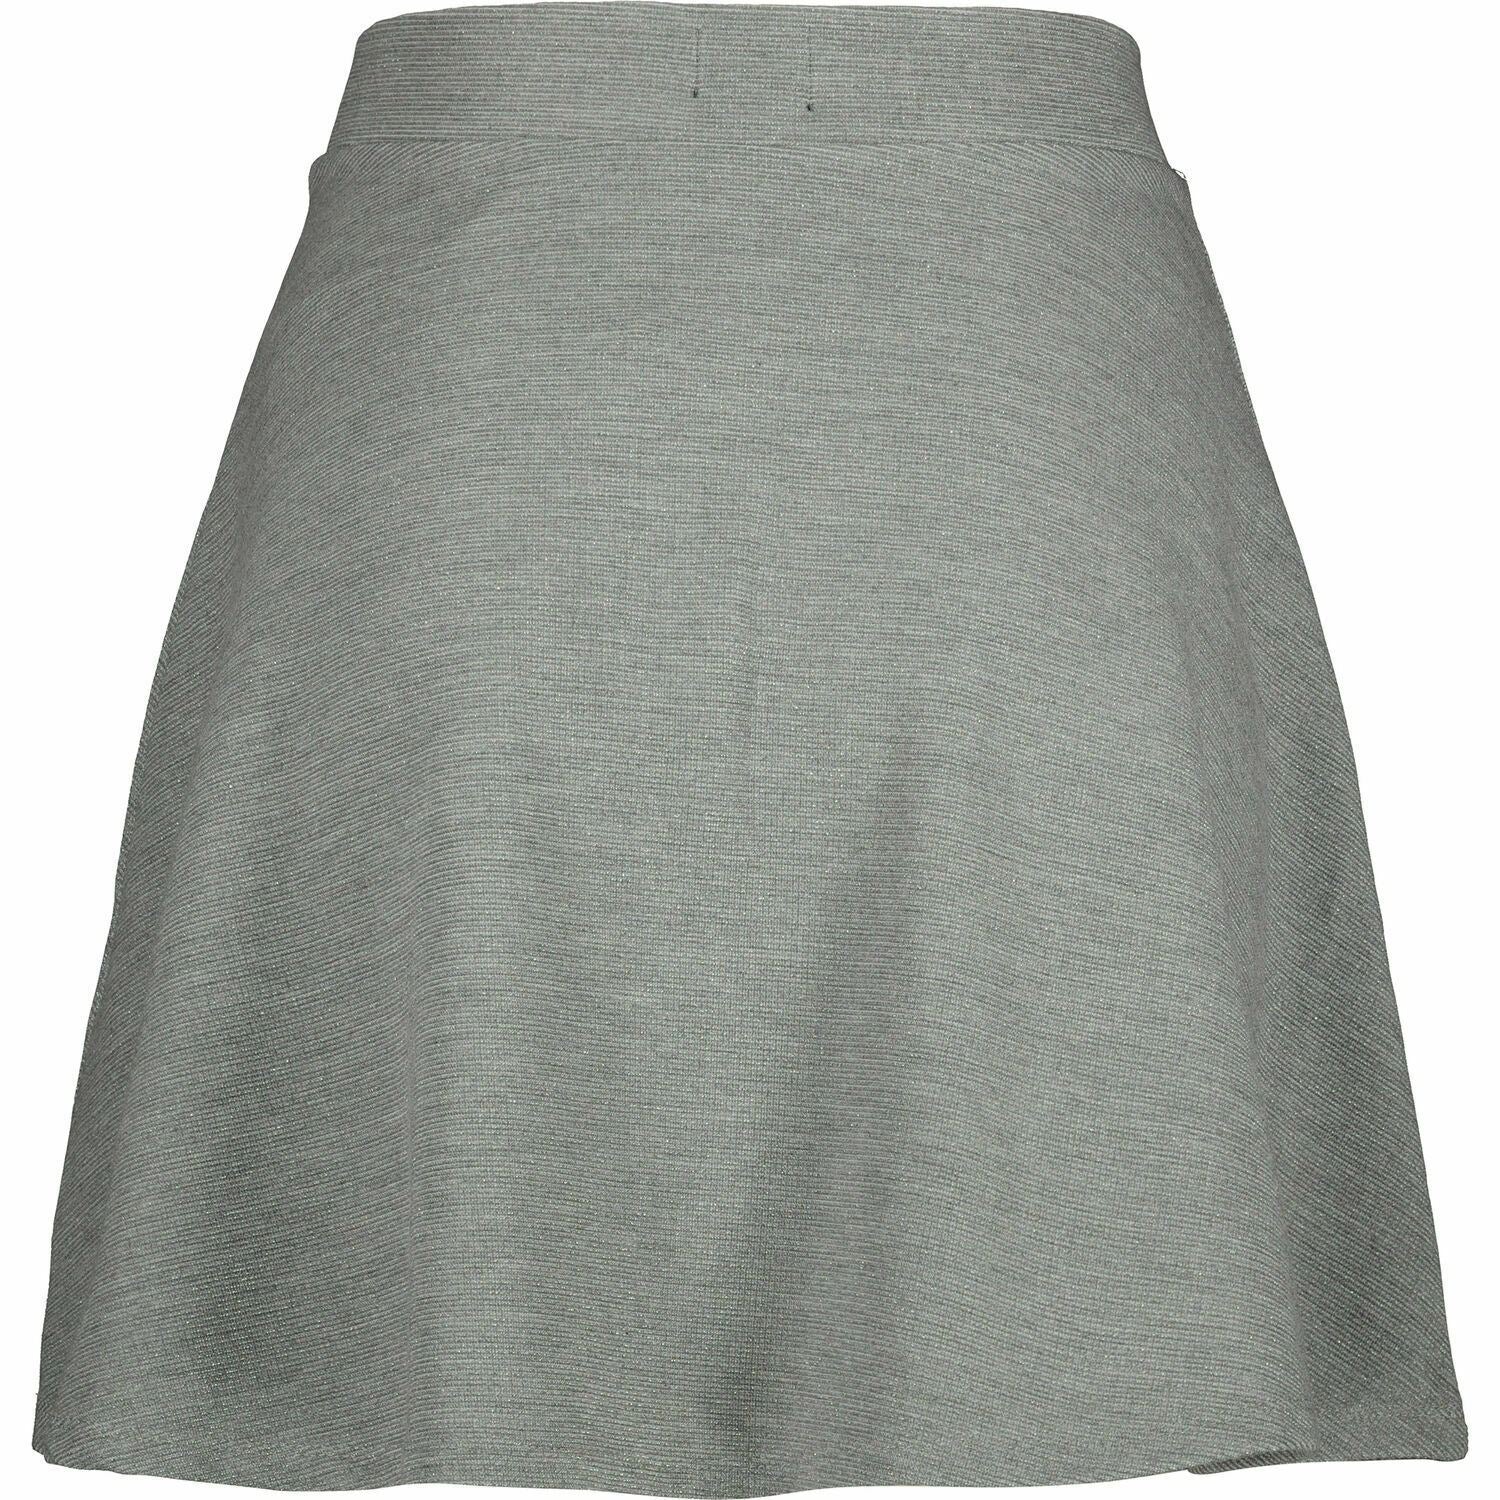 SUPERDRY Women's TAYLA Iron Grey Sparkle Skater Skirt, size M / UK 12